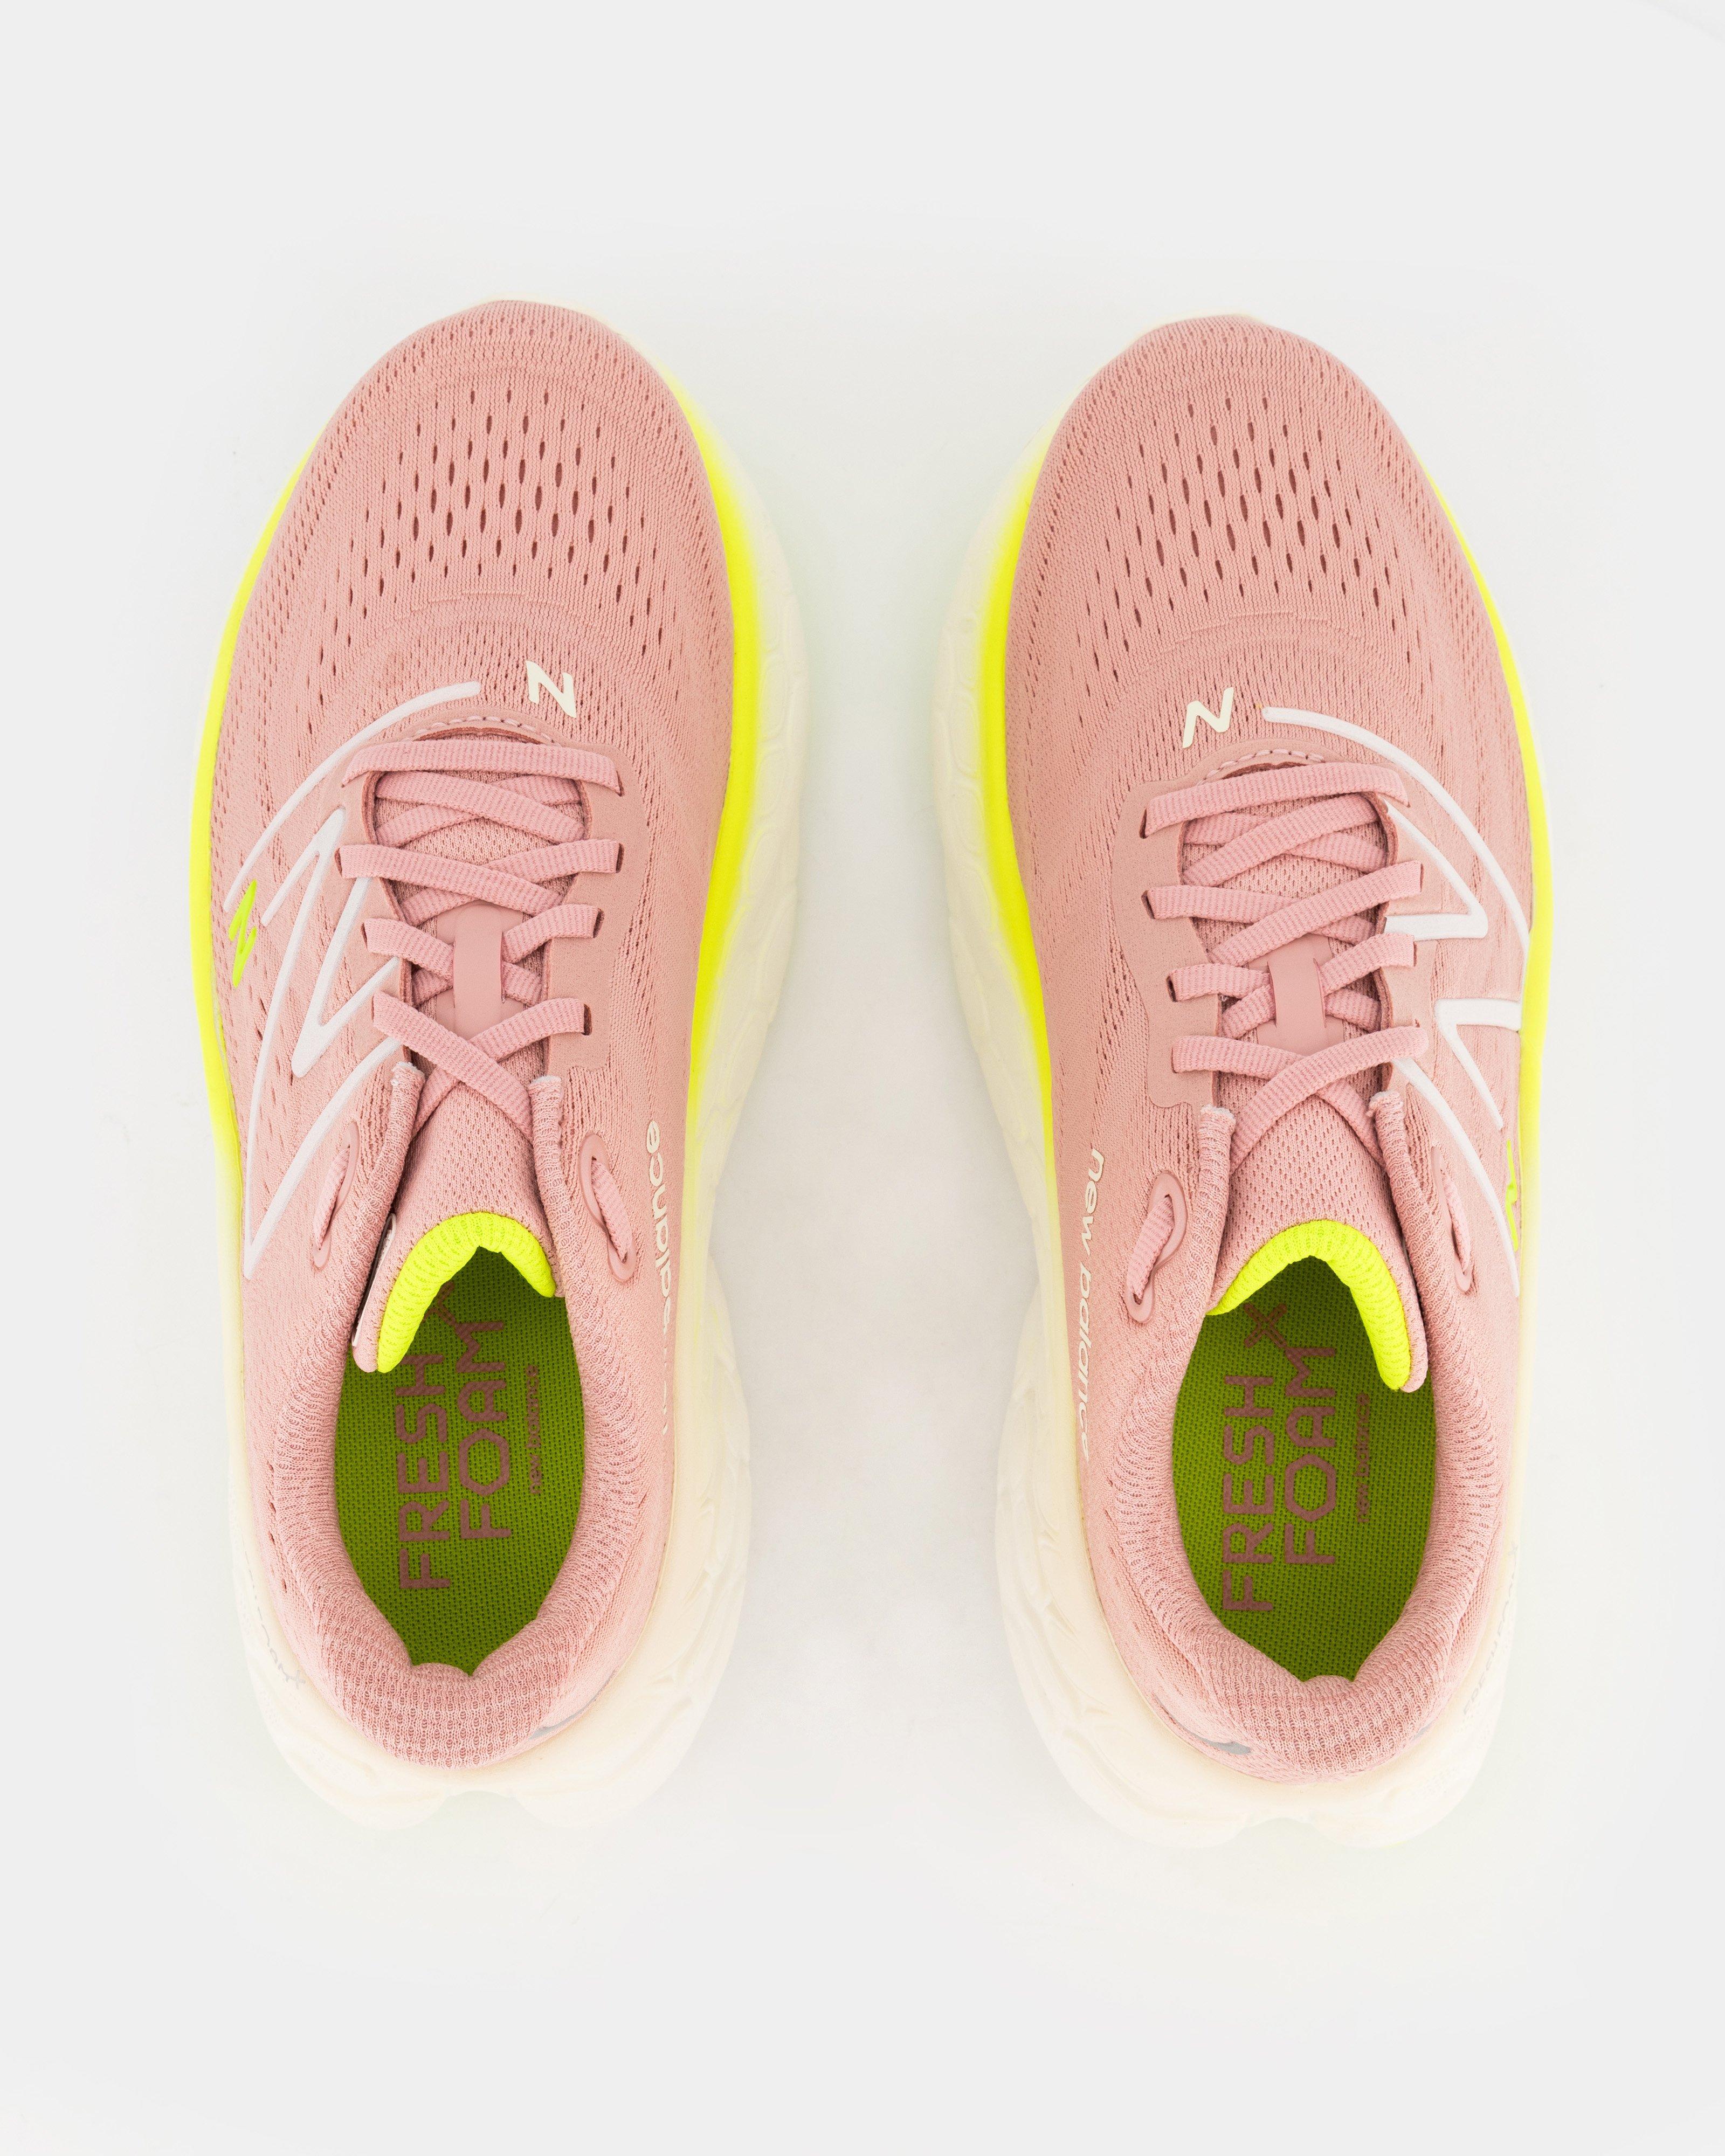 New Balance Women’s Fresh Foam X More v4 Road Running Shoes -  Pink